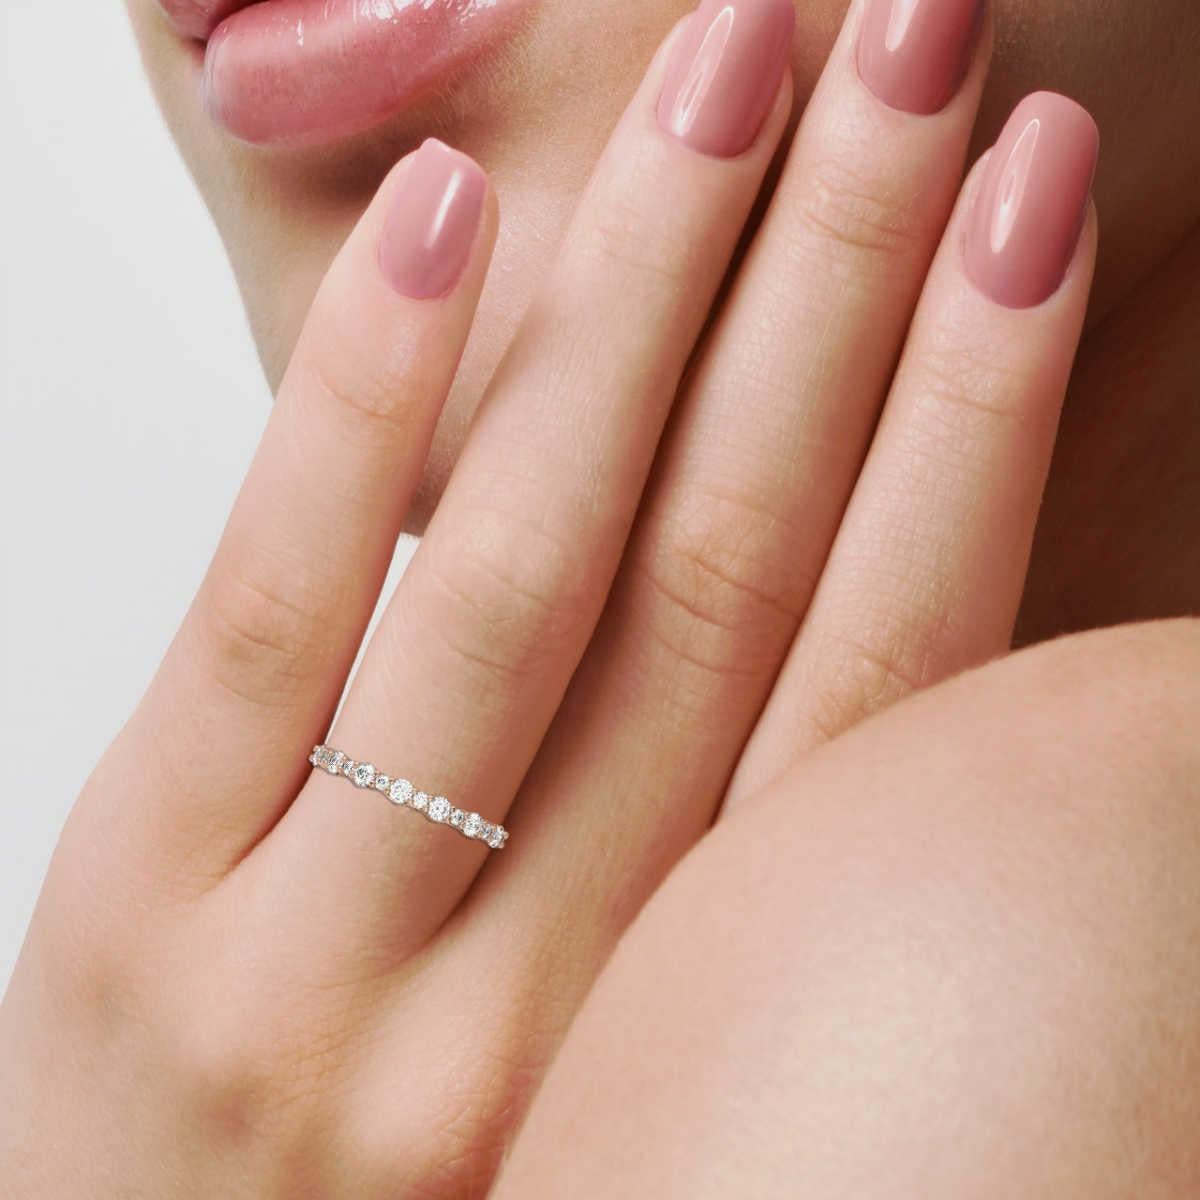 2 5 carat diamond ring